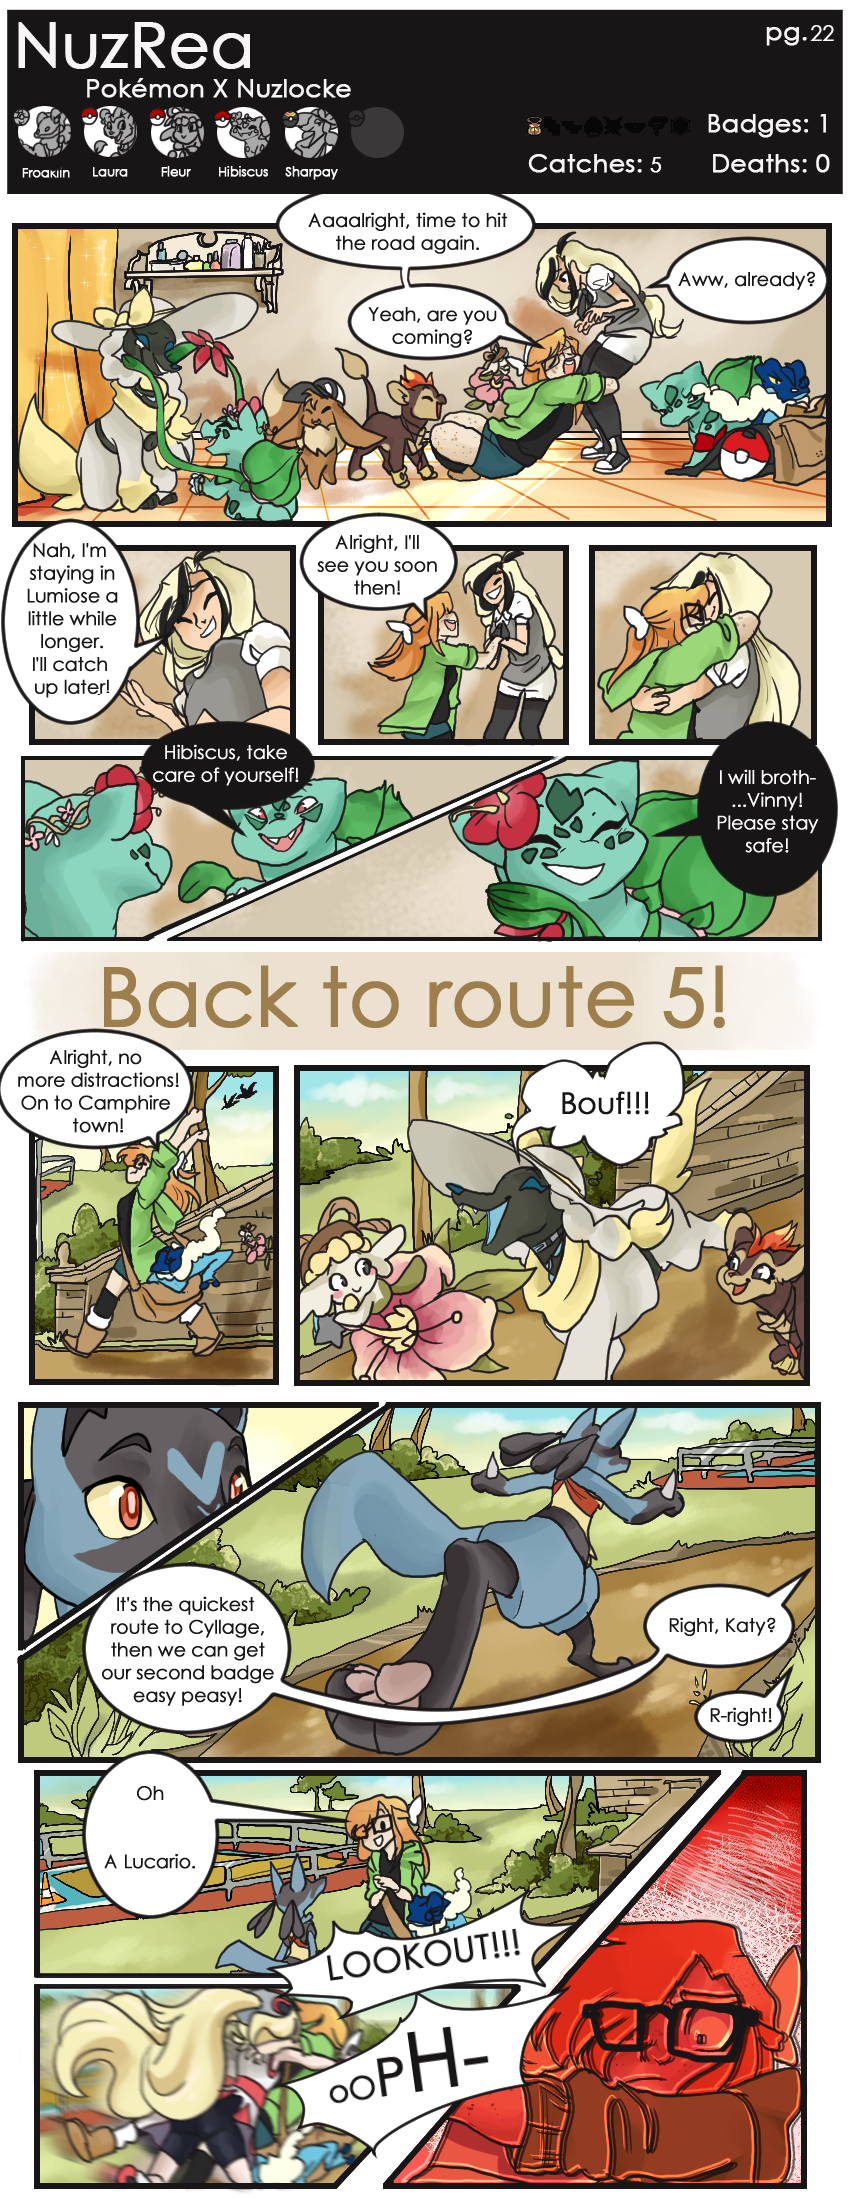 Pokemon Y Randomizer Nuzlocke EP16 - Korrina Battle & Route 11